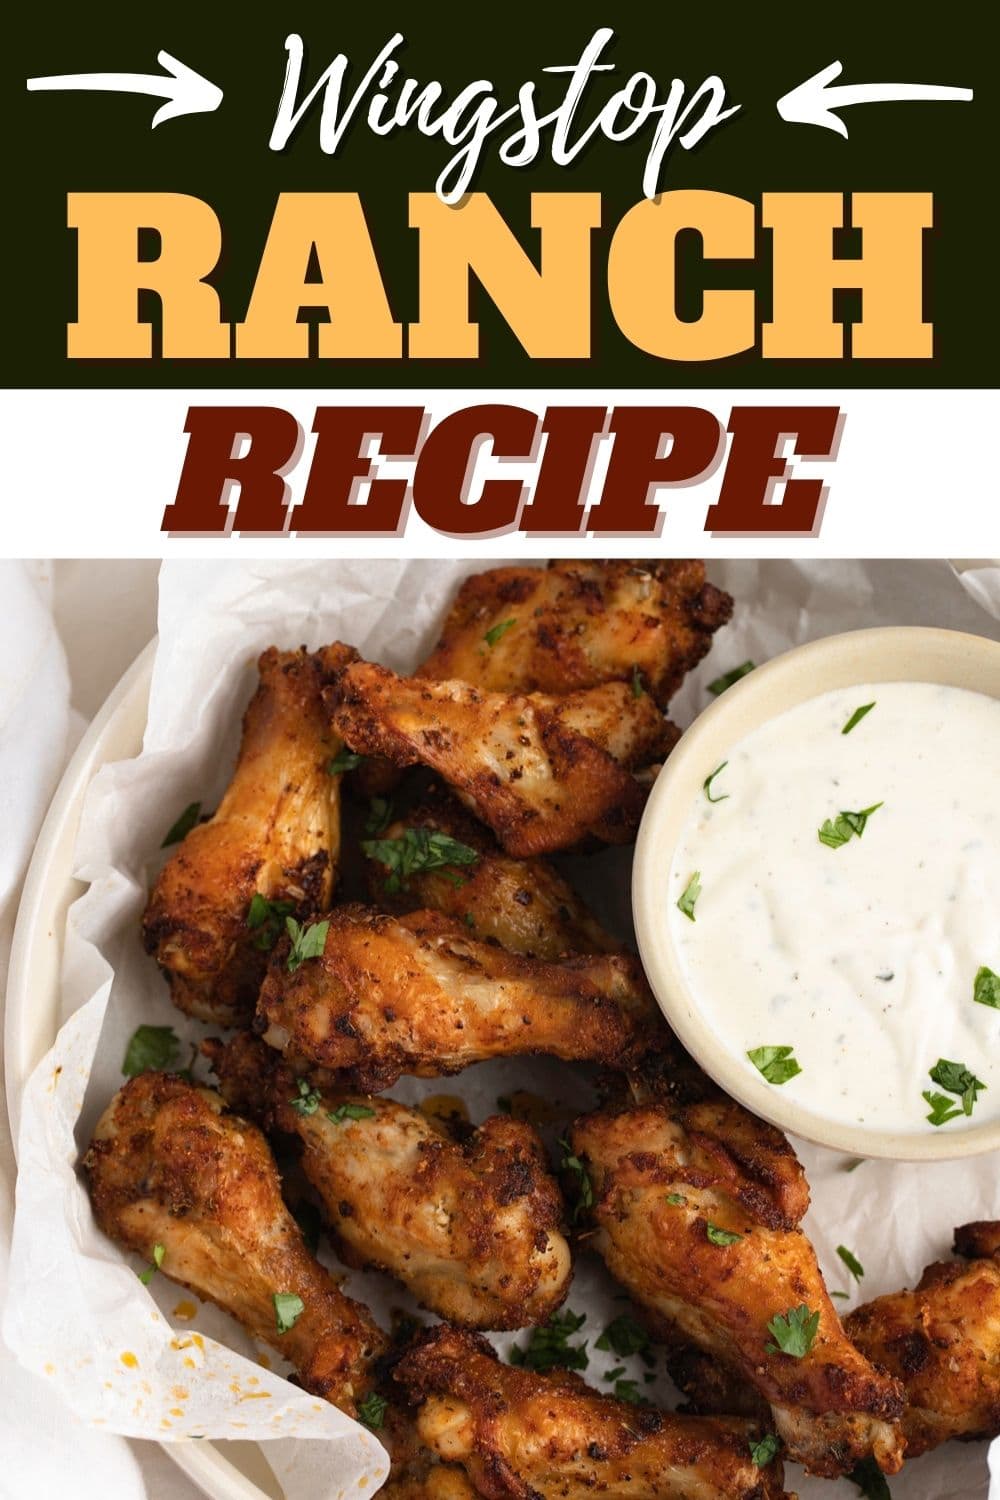 Wingstop Ranch Recipe (Copycat) Insanely Good